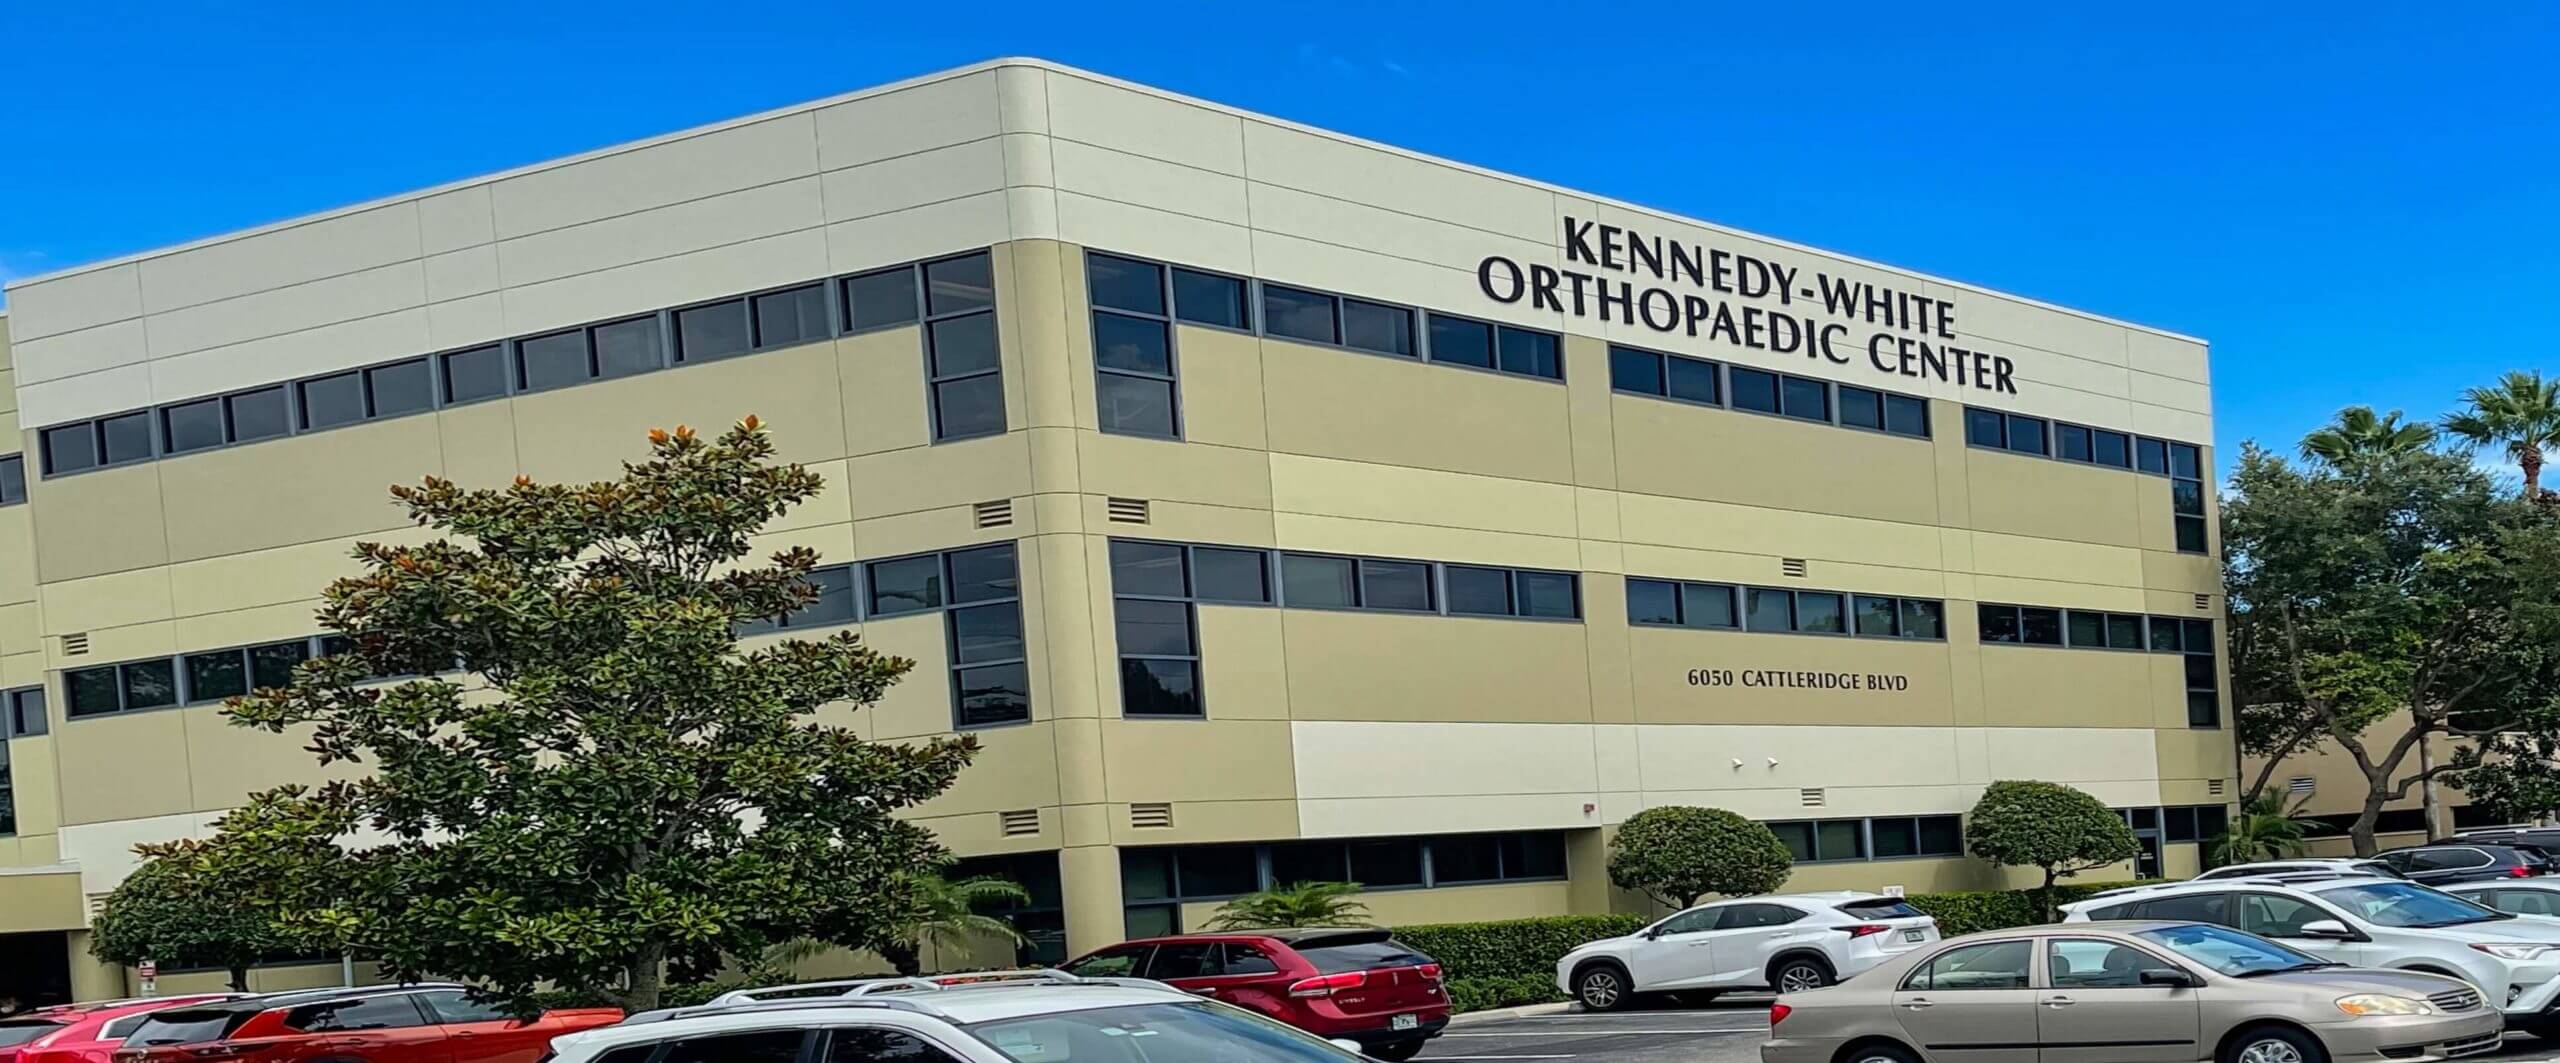 Kennedy-White Orthopaedic Center building in Sarasota, FL